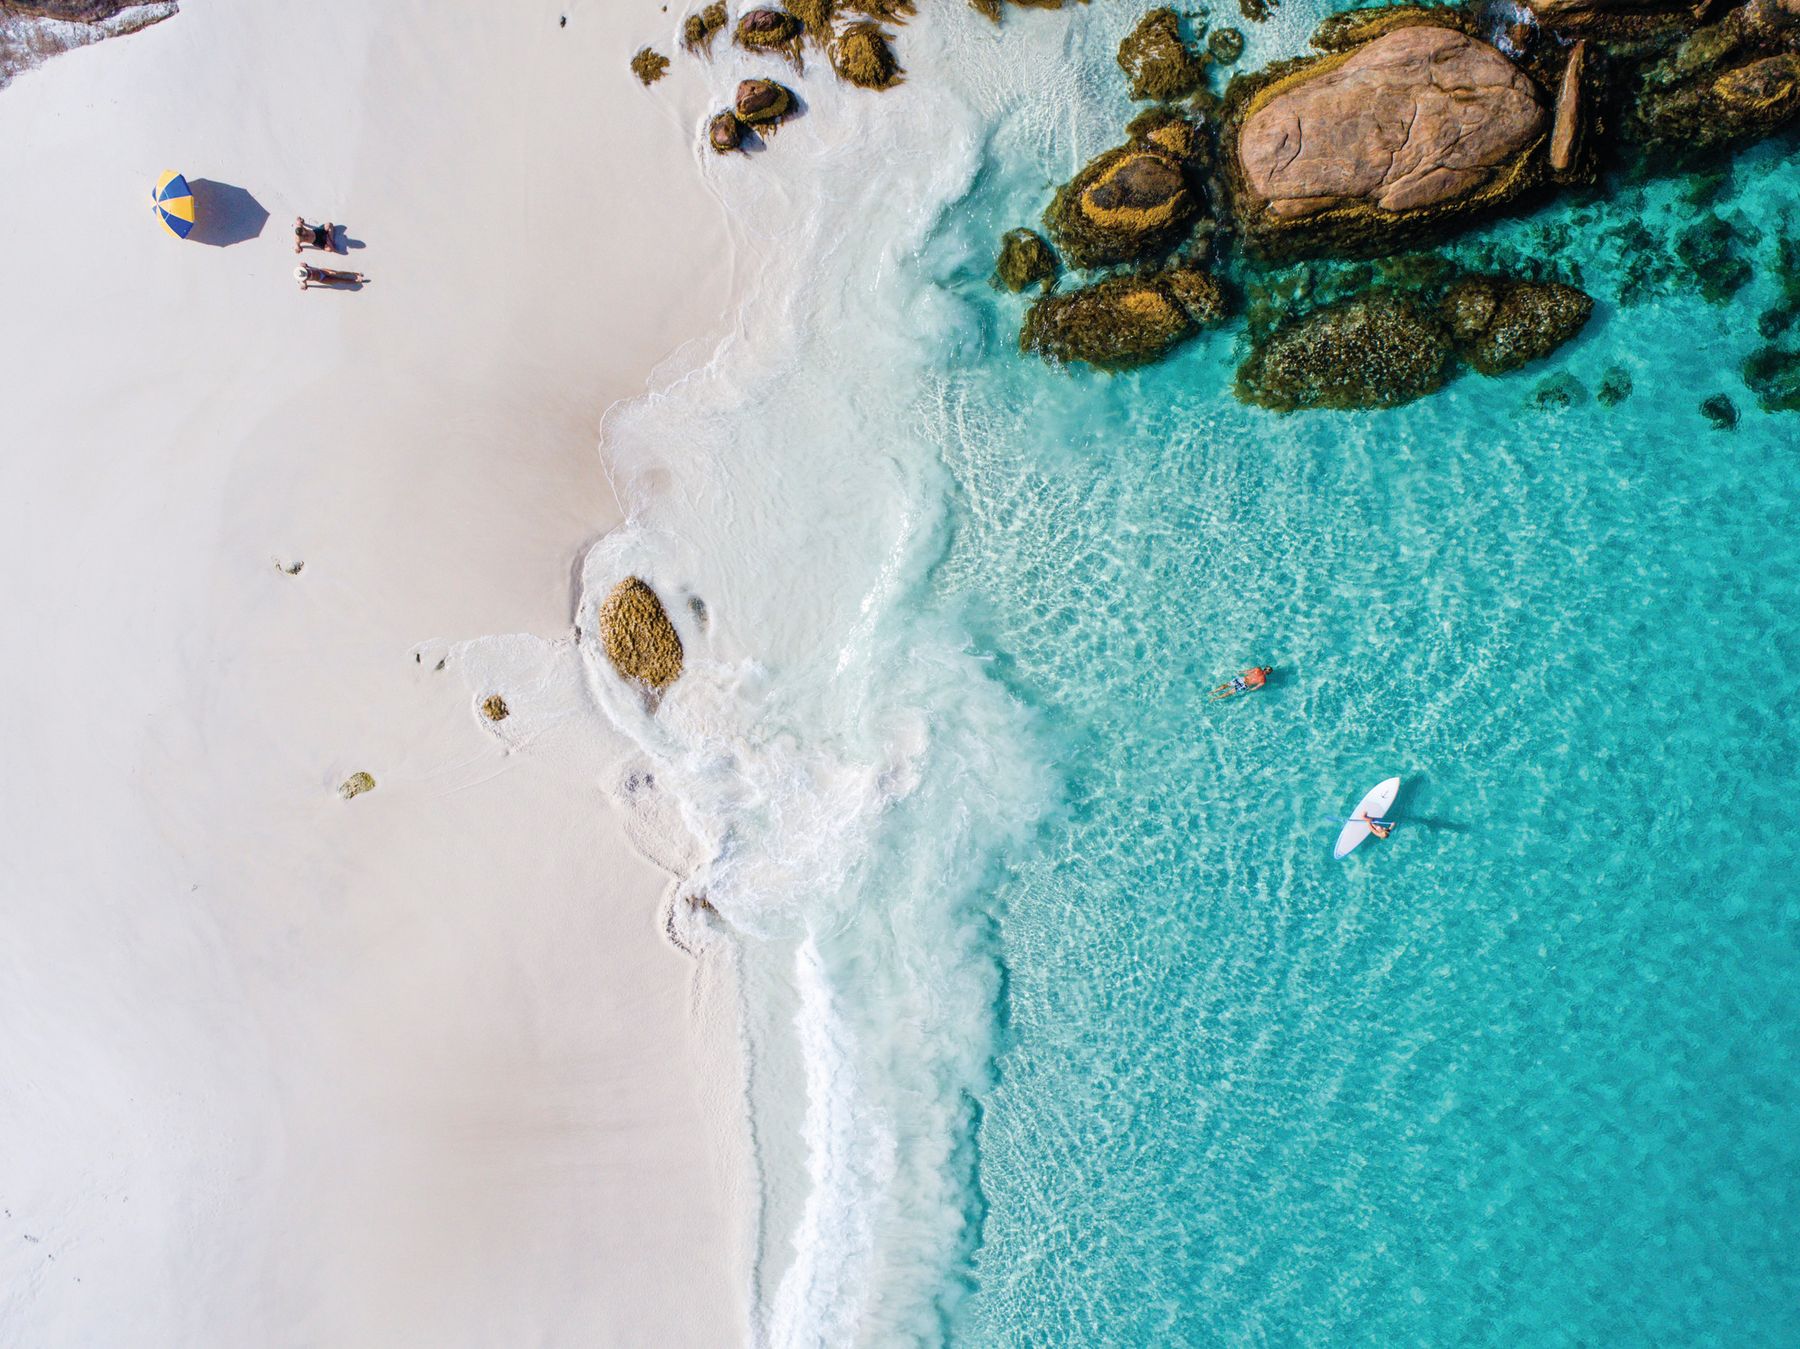 Western Australia: A beach